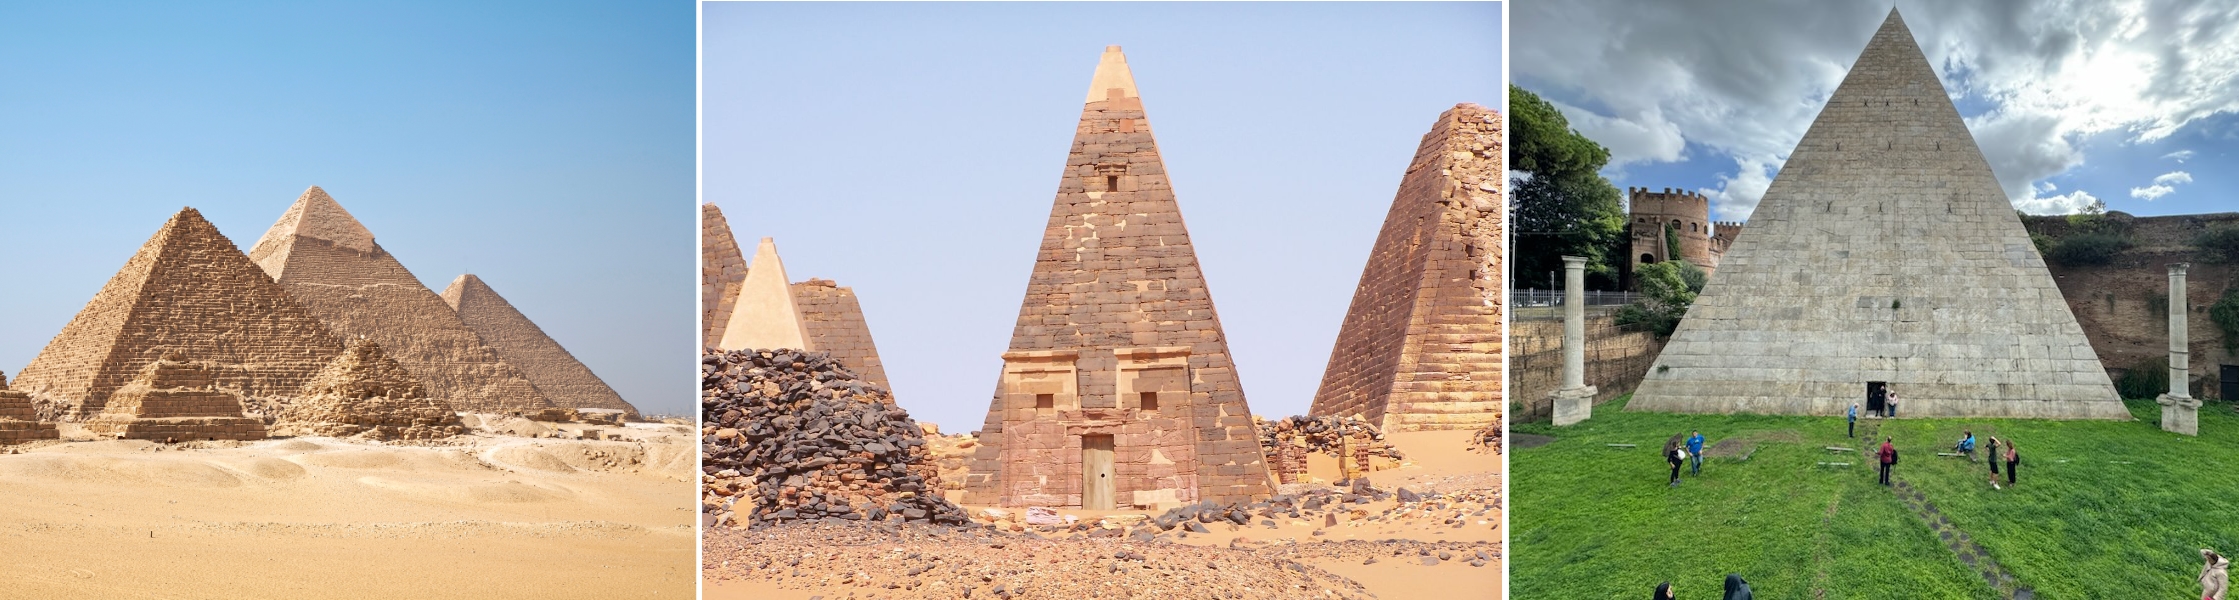 Left: Giza pyramids, Egypt, 2600–2500 B.C.E. (photo: Ikiwaner, CC BY-SA 2.0); center: Pyramids of Meroë, Kingdom of Kush, Sudan,  c. 300 B.C.E–350 C.E. (photo: Fabrizio Demartis, CC BY-NC-SA 2.0); right: Pyramid of Gaius Cestius, Rome, c. 12 B.C.E., 37 x 30 m (photo: Dr. Kimberly Cassibry, CC BY-NC-SA 4.0)